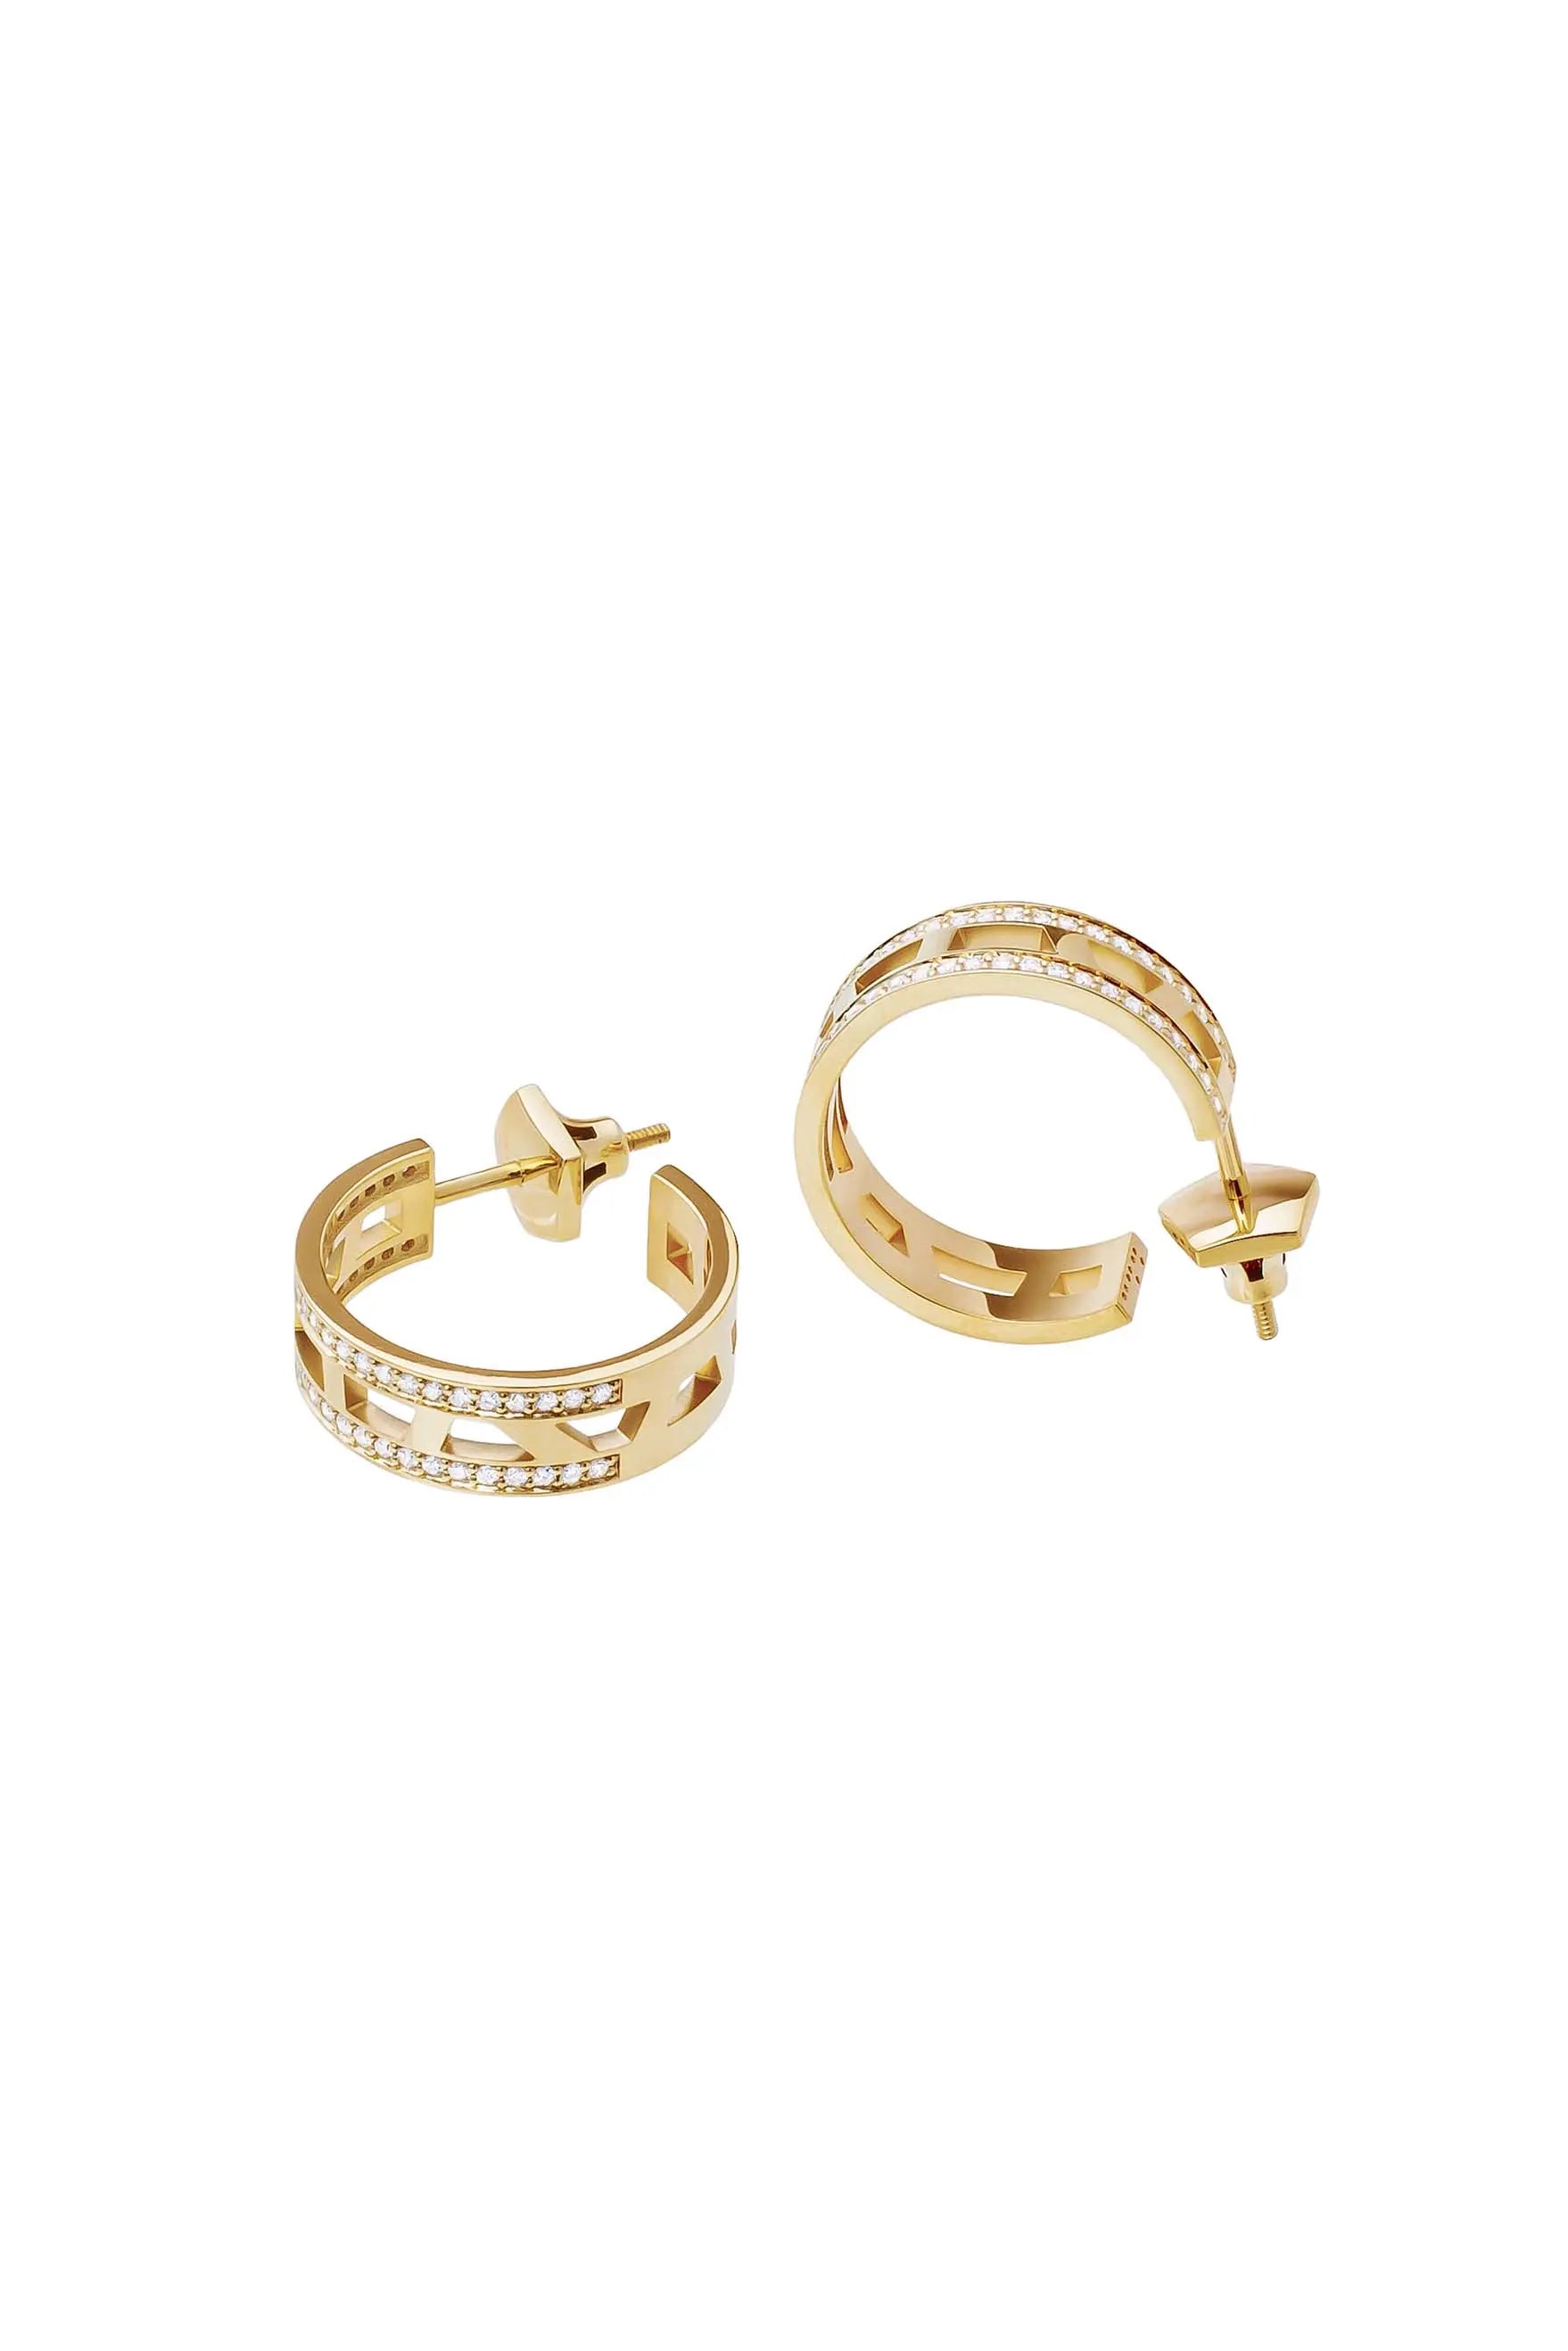 simple ring shape s925 pure silver| Alibaba.com